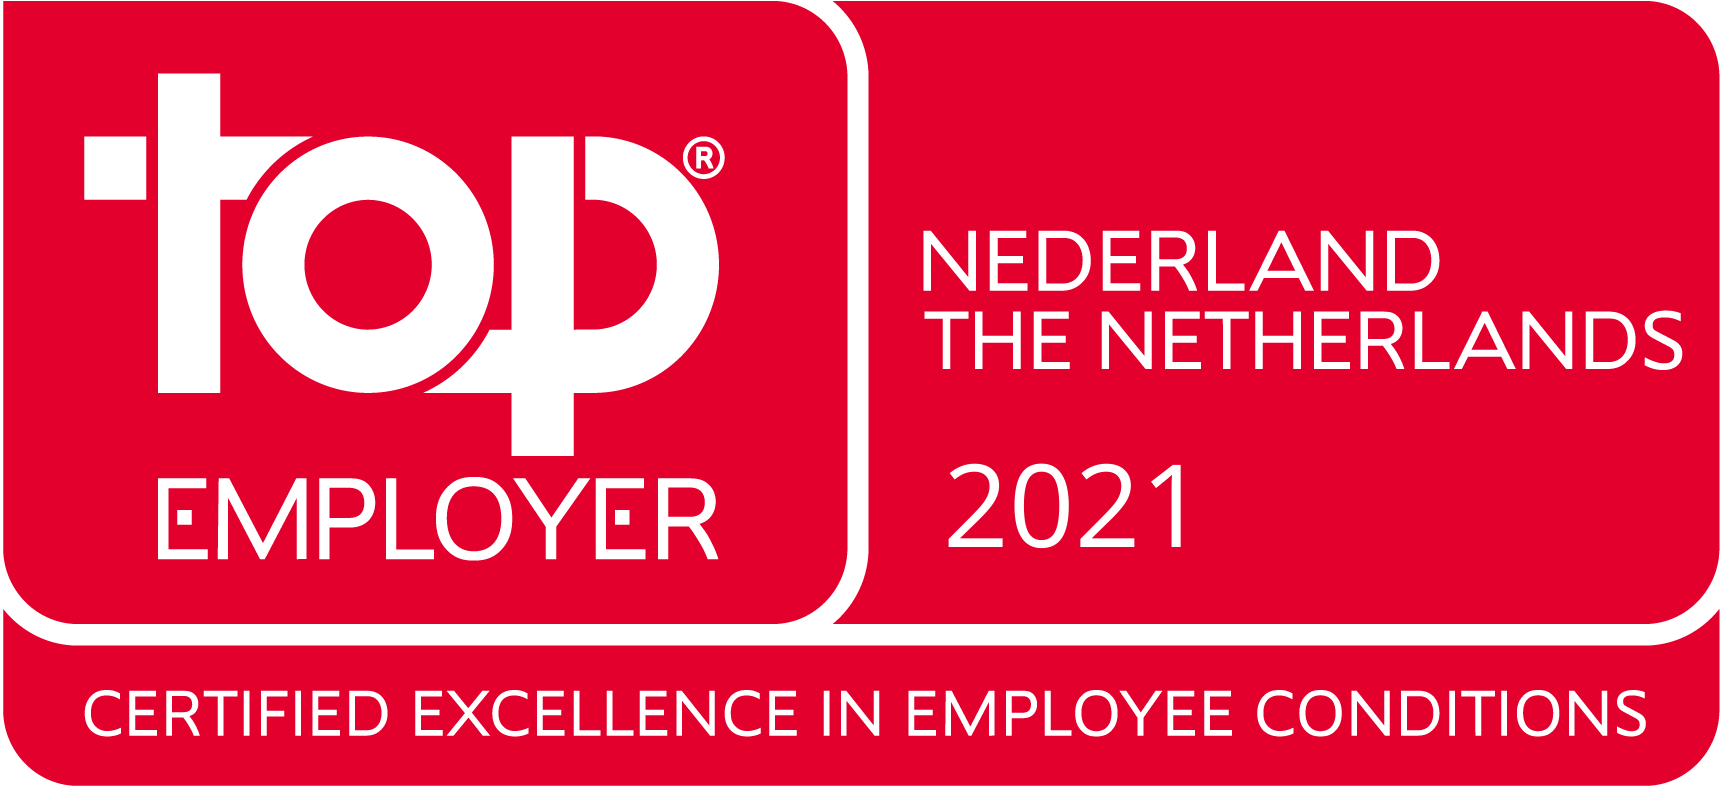 Top Employer 2021 NL